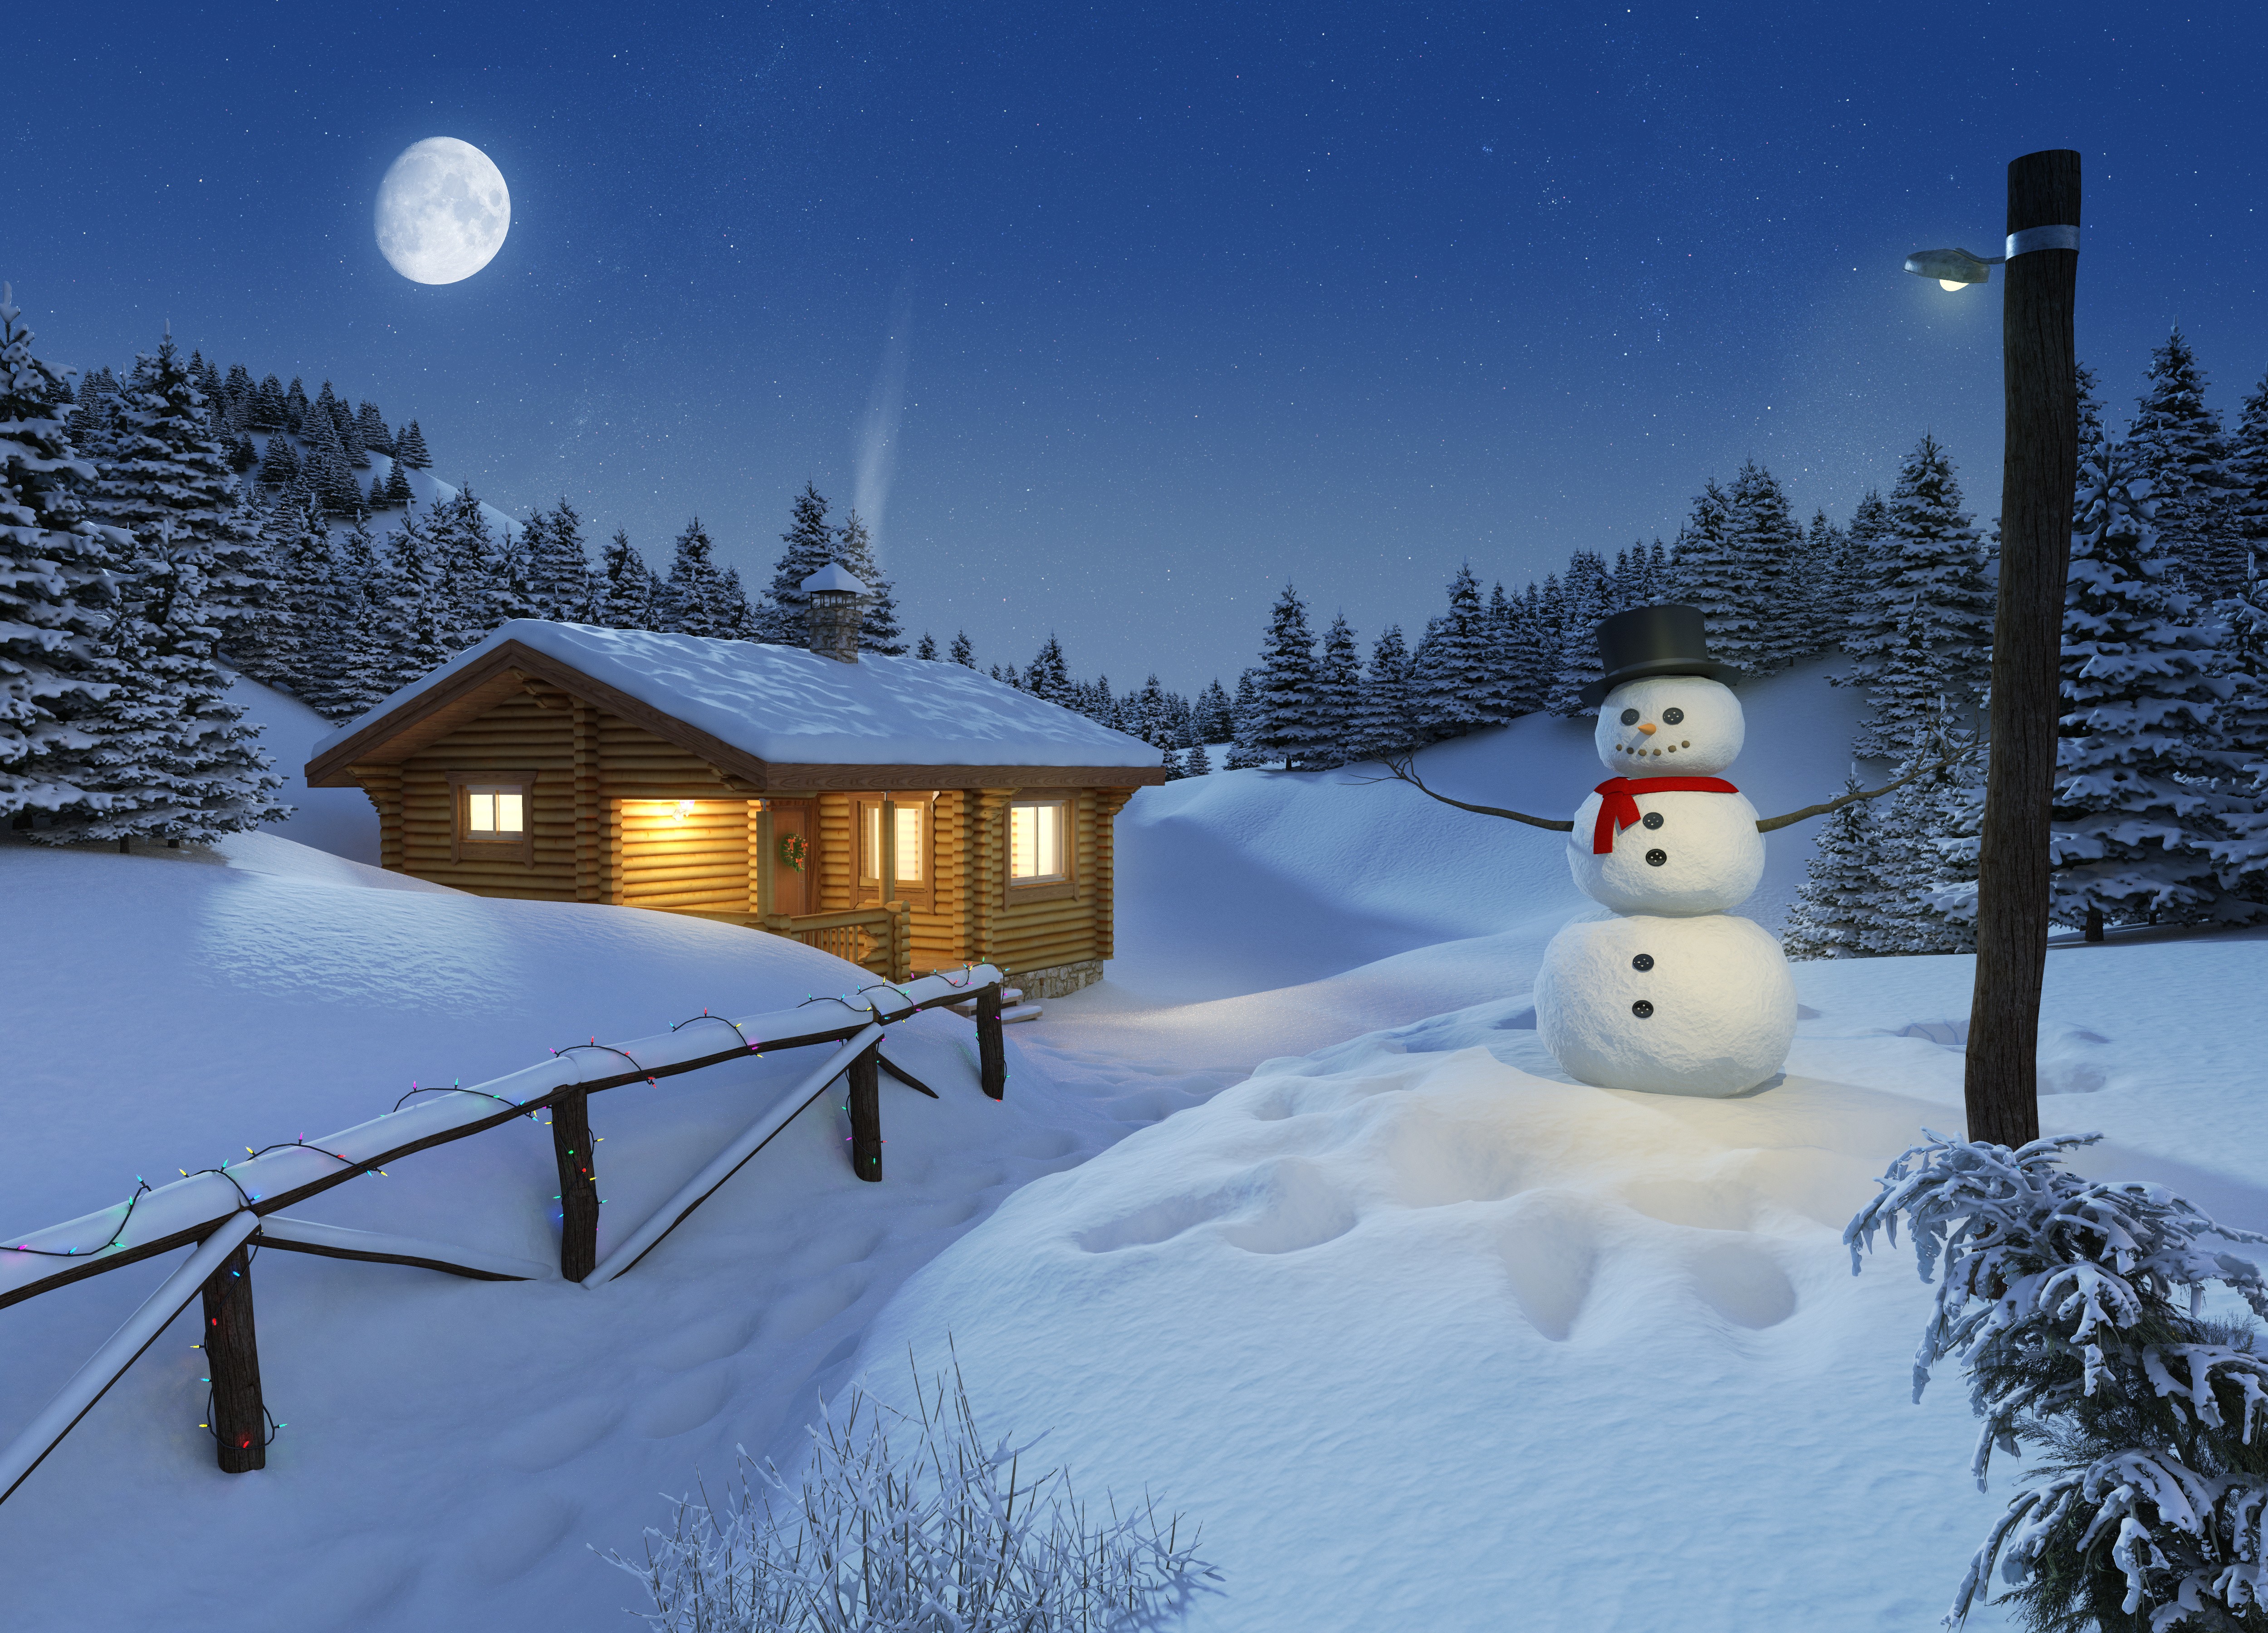 General 5000x3600 winter digital art holiday snowman